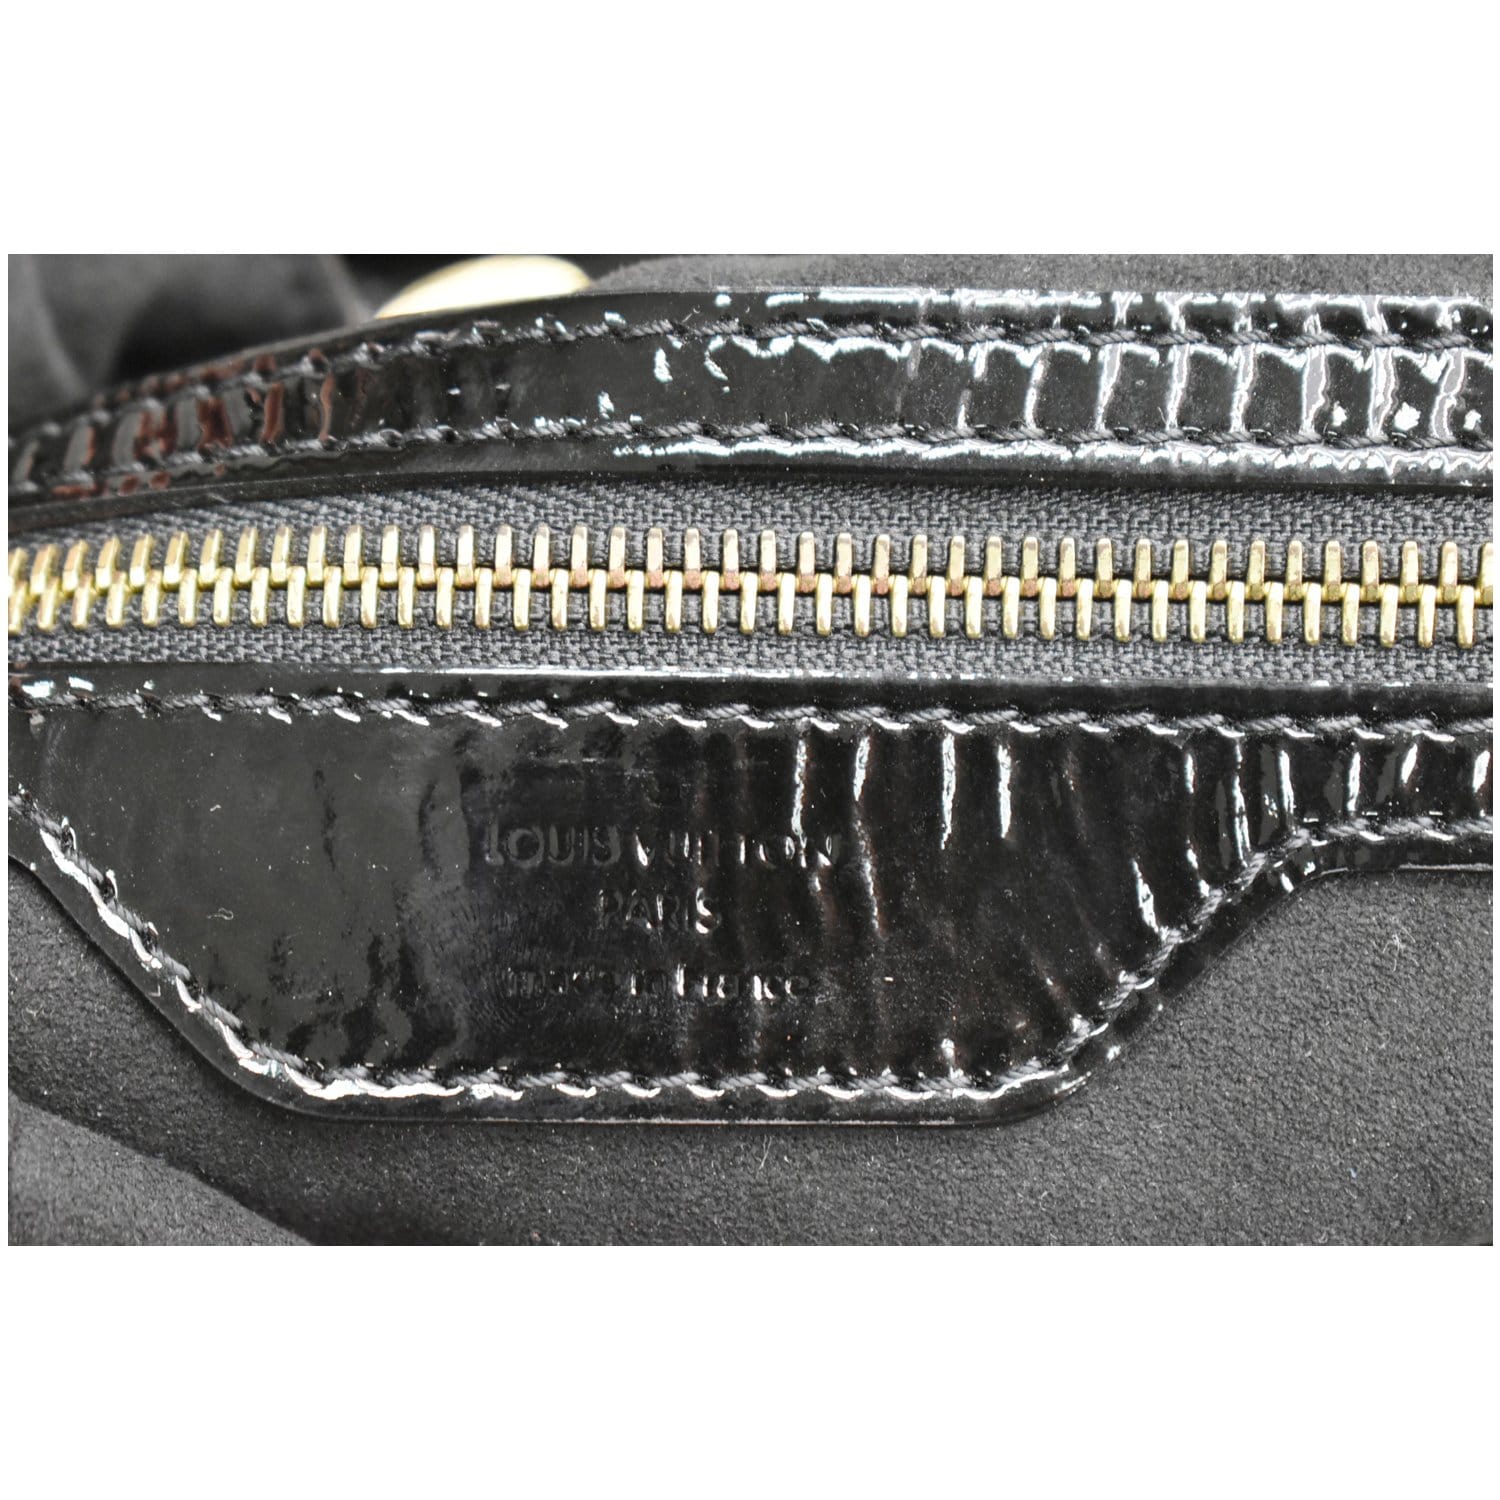 LOUIS VUITTON Surya Mahina XL Limited Edition Black Patent Leather Hob